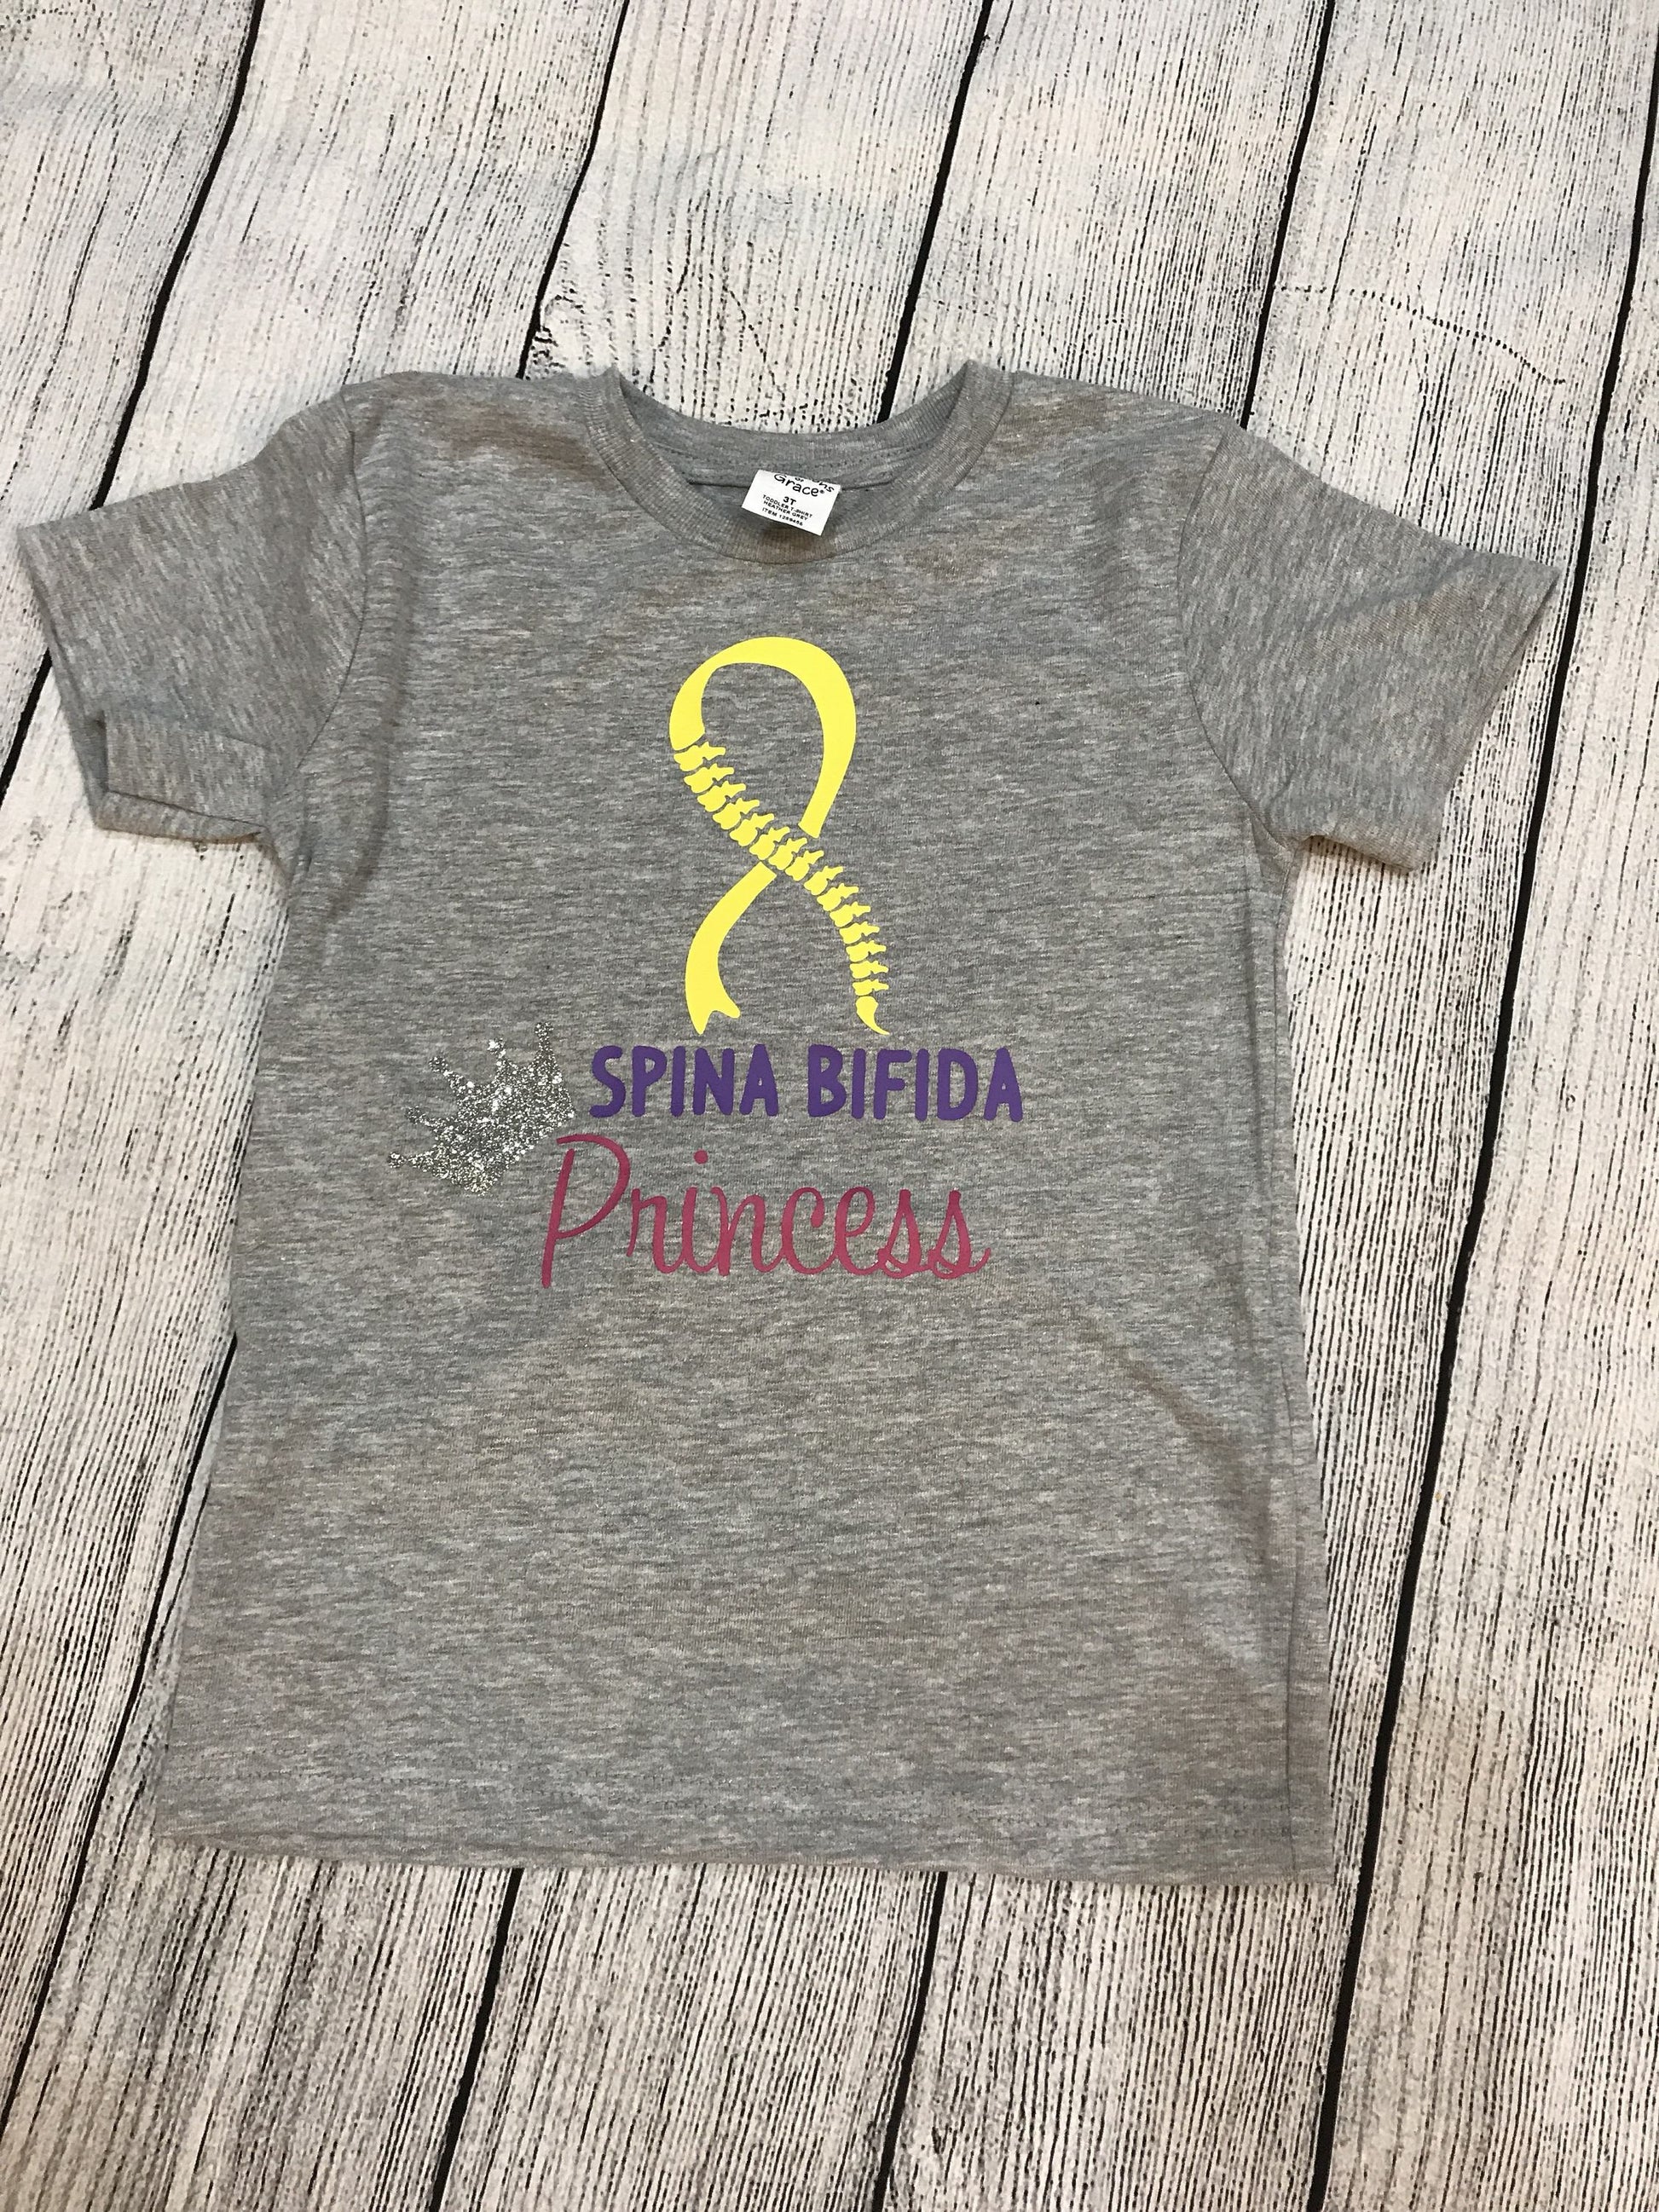 Handcrafted Children's Clothing, Clothing for Children and Parents, Spina Bifida Princess- Spina Bifida Awareness Shirt, chi-fashionista